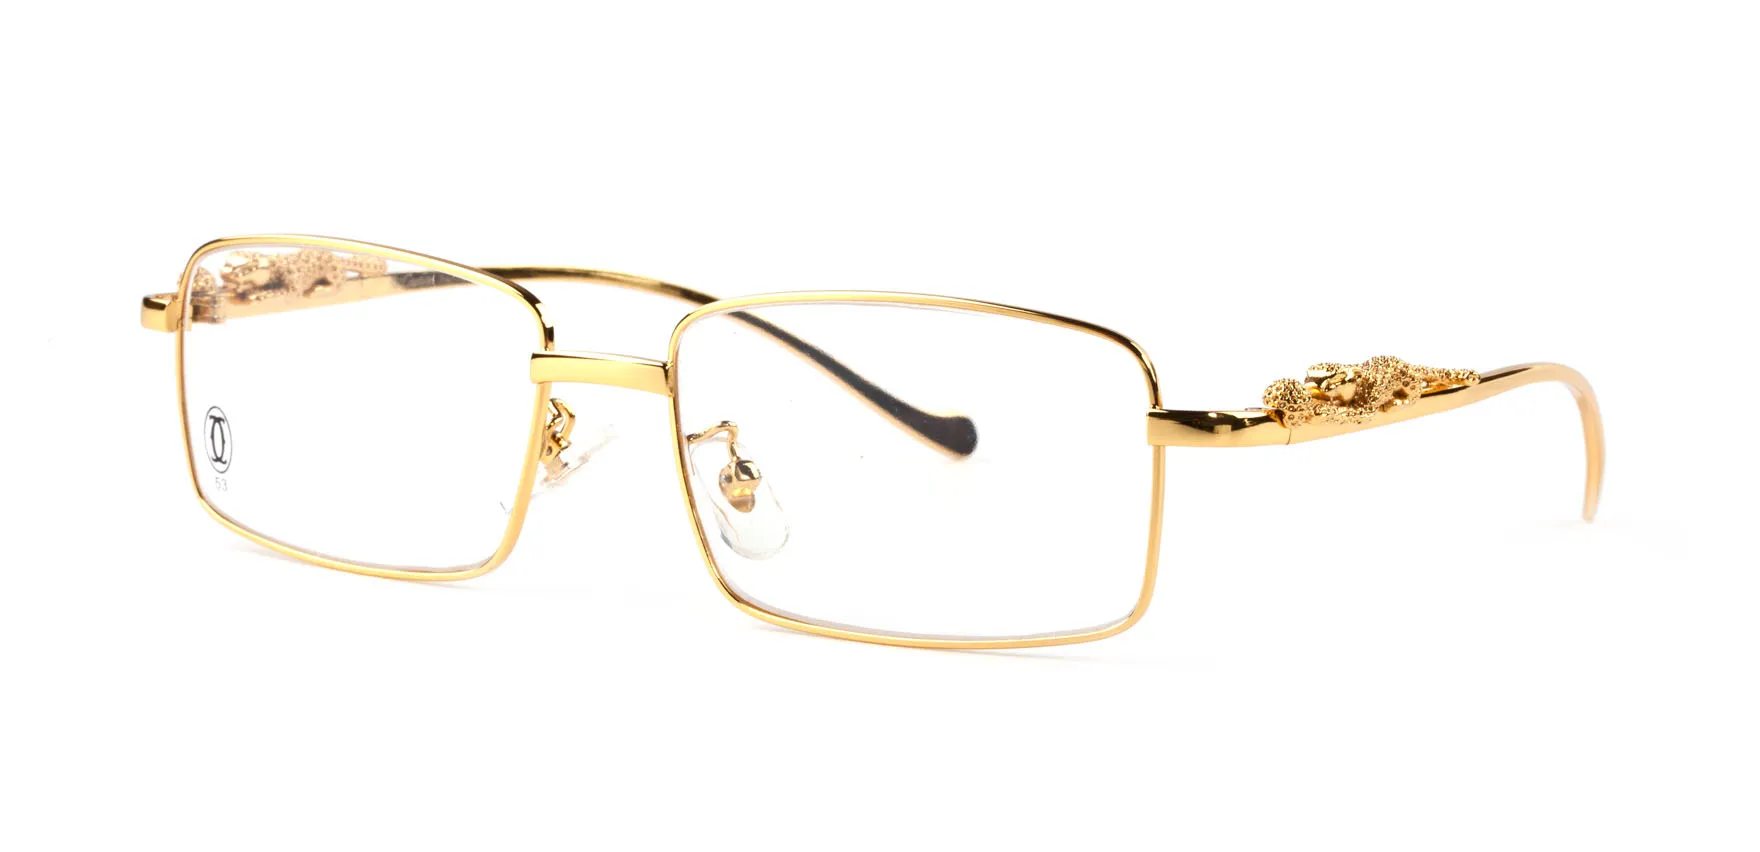 Gros-Clear Lens mode Cadres jambes Femmes Marque Designer hommes lunettes de soleil lunettes